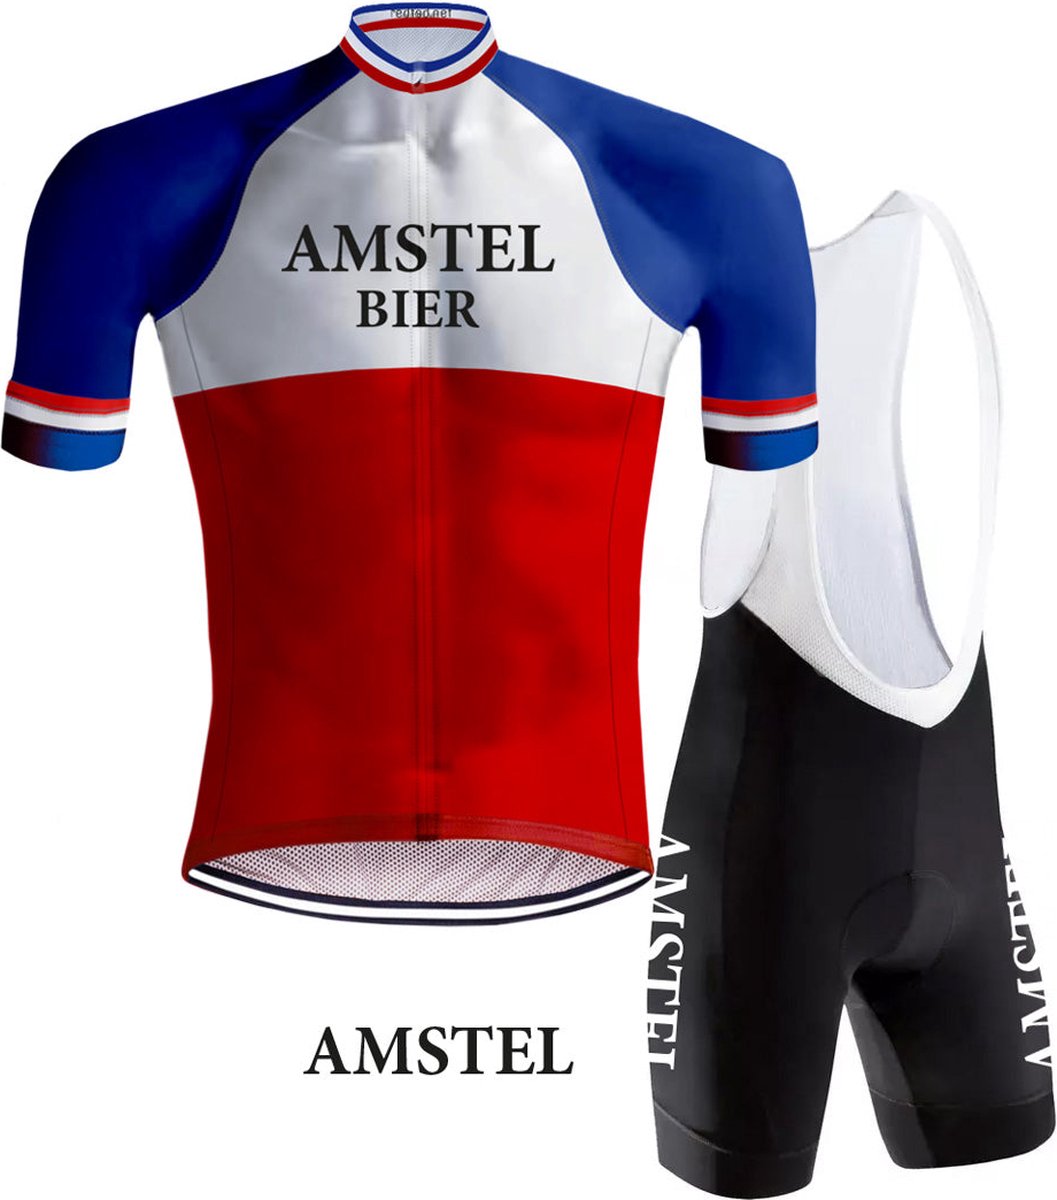 Retro Wielertenue Amstel Bier Rood/Blauw - REDTED (M)